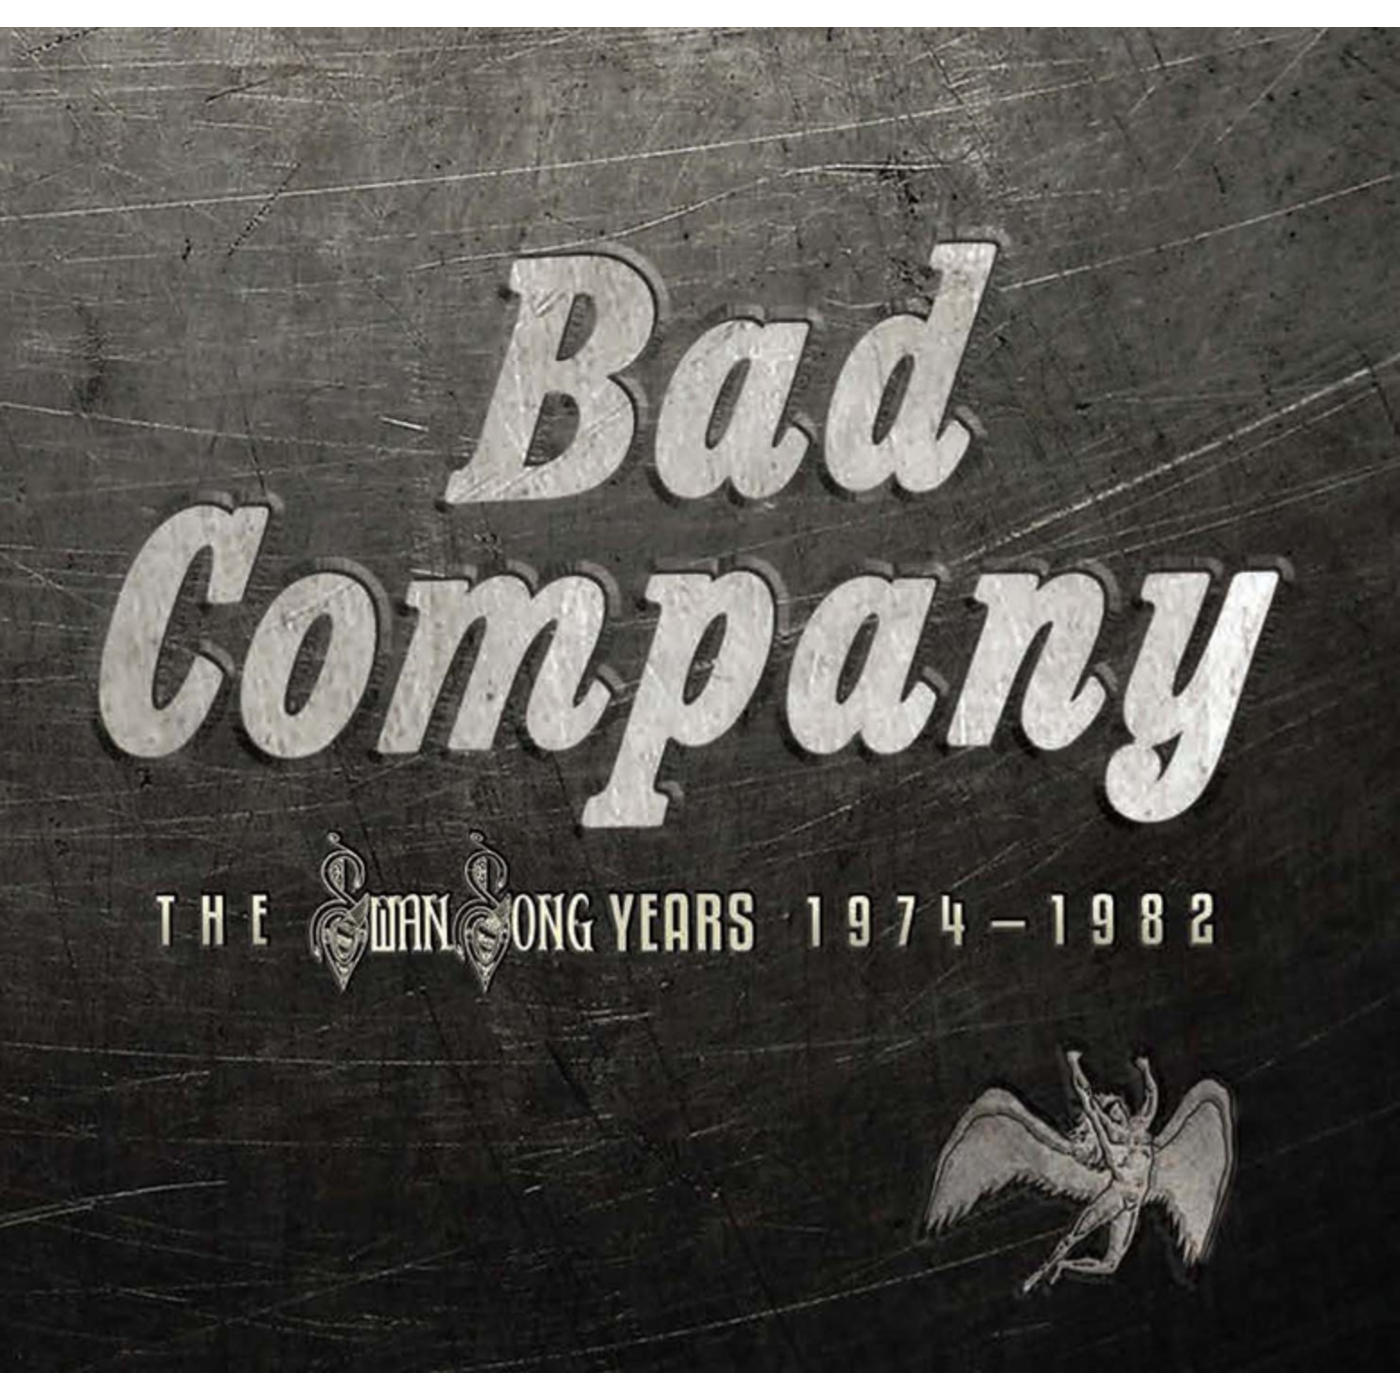 BAD COMPANY – The Swan Song Years 1974 – 1982